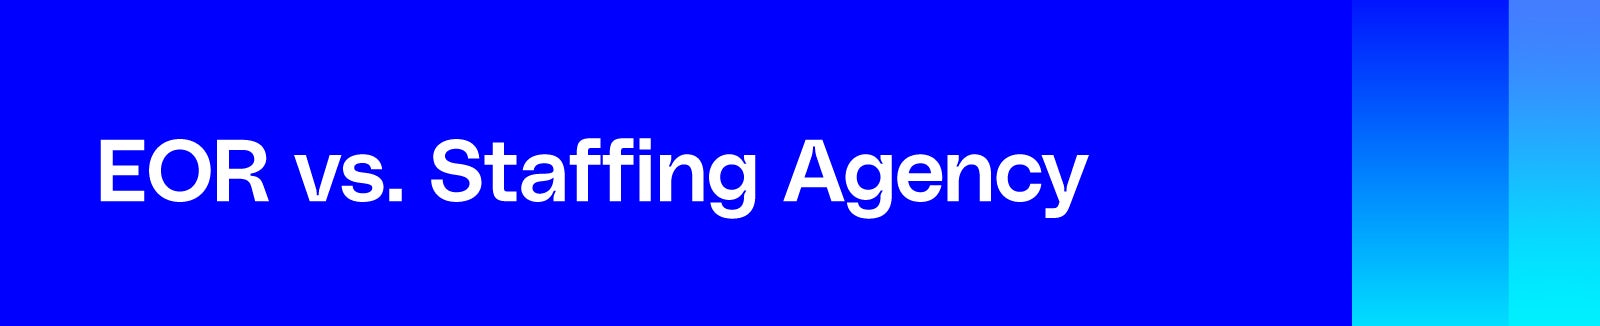 EOR vs. Staffing Agency banner